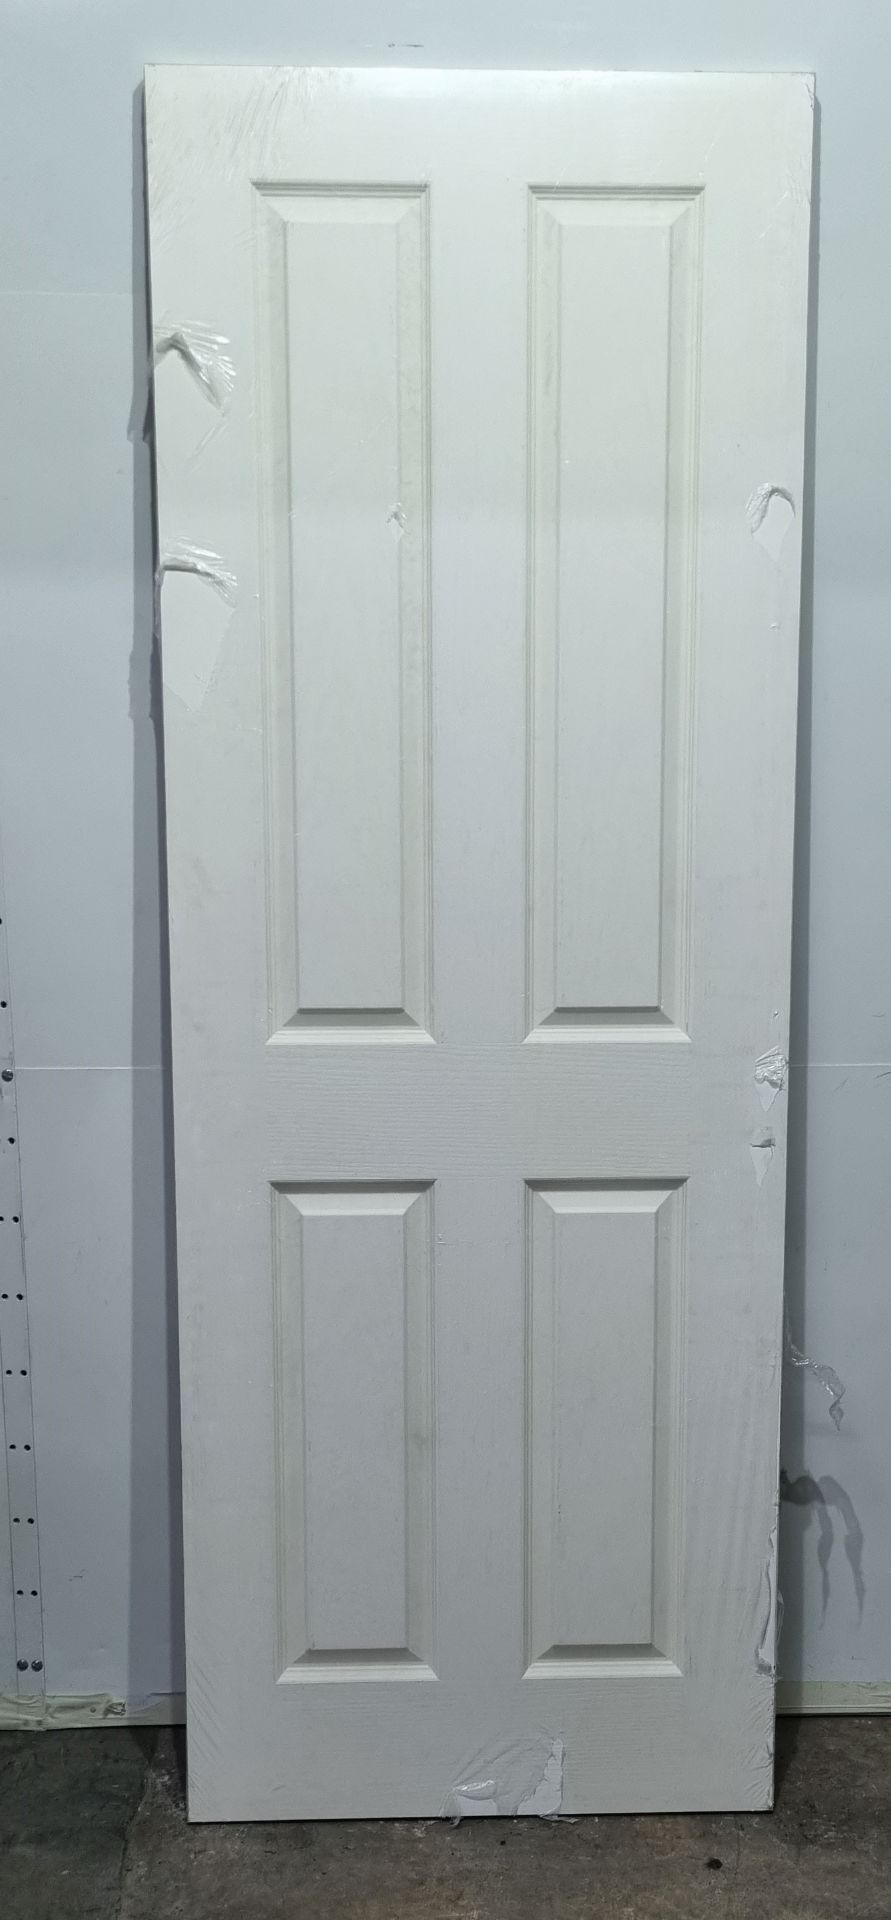 Bulk Quantity of Ex-Display Internal Doors, Accessories, & Fire Surrounds - Image 21 of 47